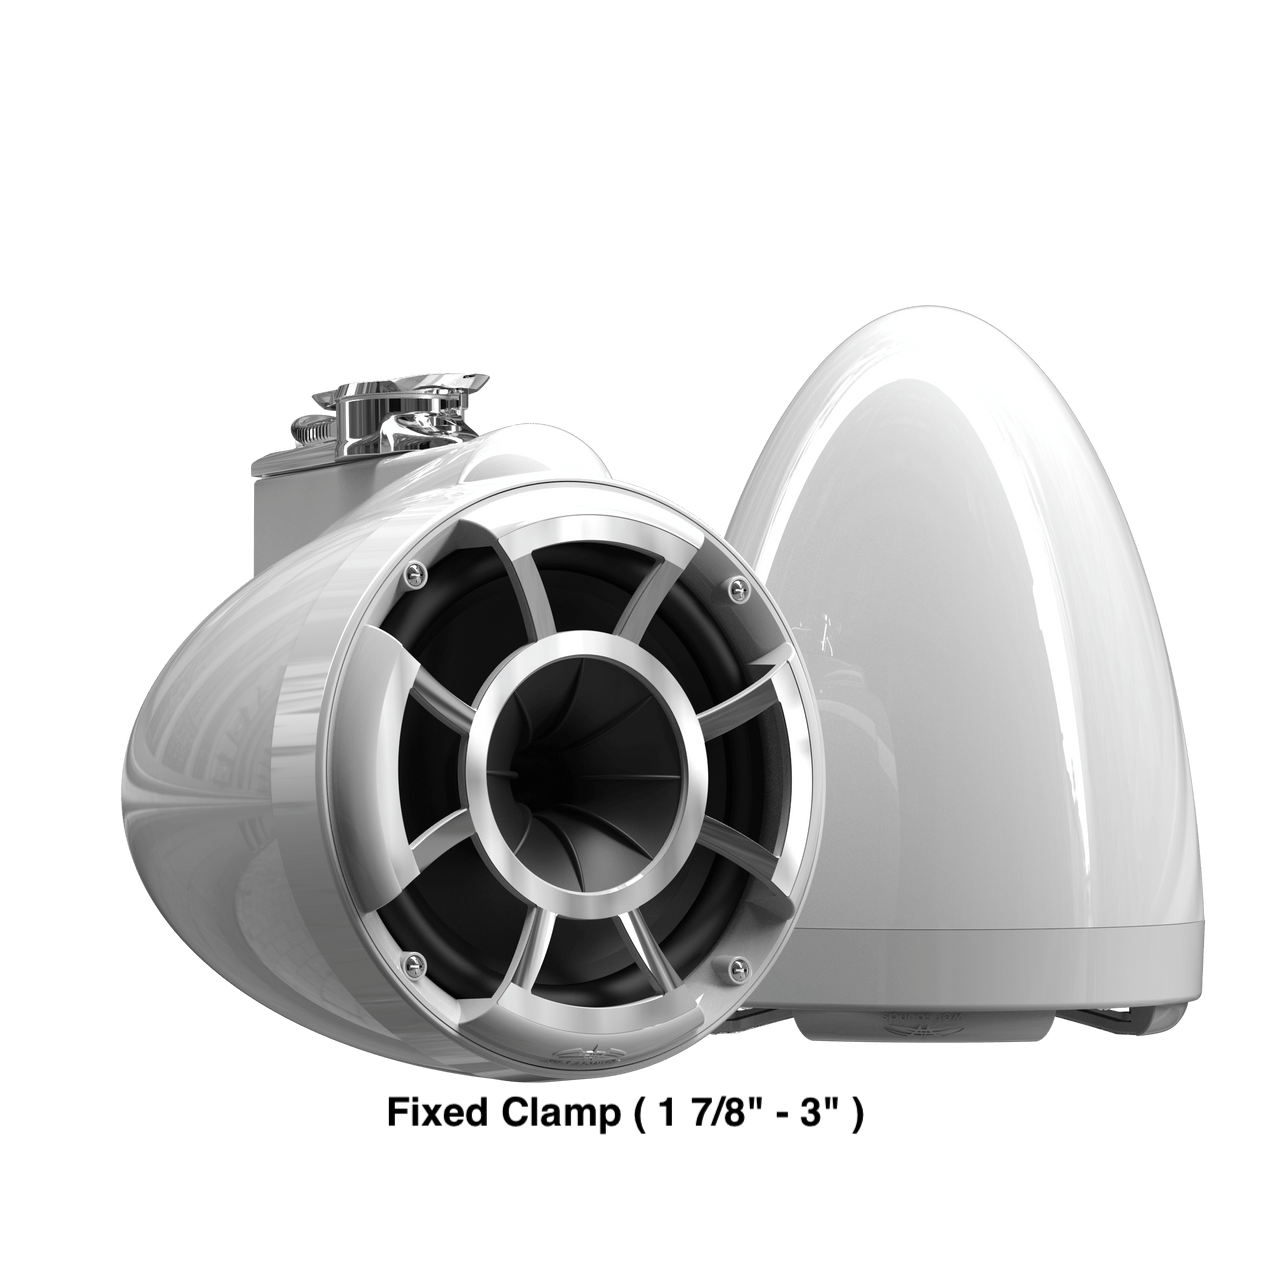 Wet Sounds Boat Wake Tower Speakers Fixed Clamp ( 1 7/8" - 3" ) Wet Sounds  REV10™ White V2 | Revolution Series 10" White Tower Speakers